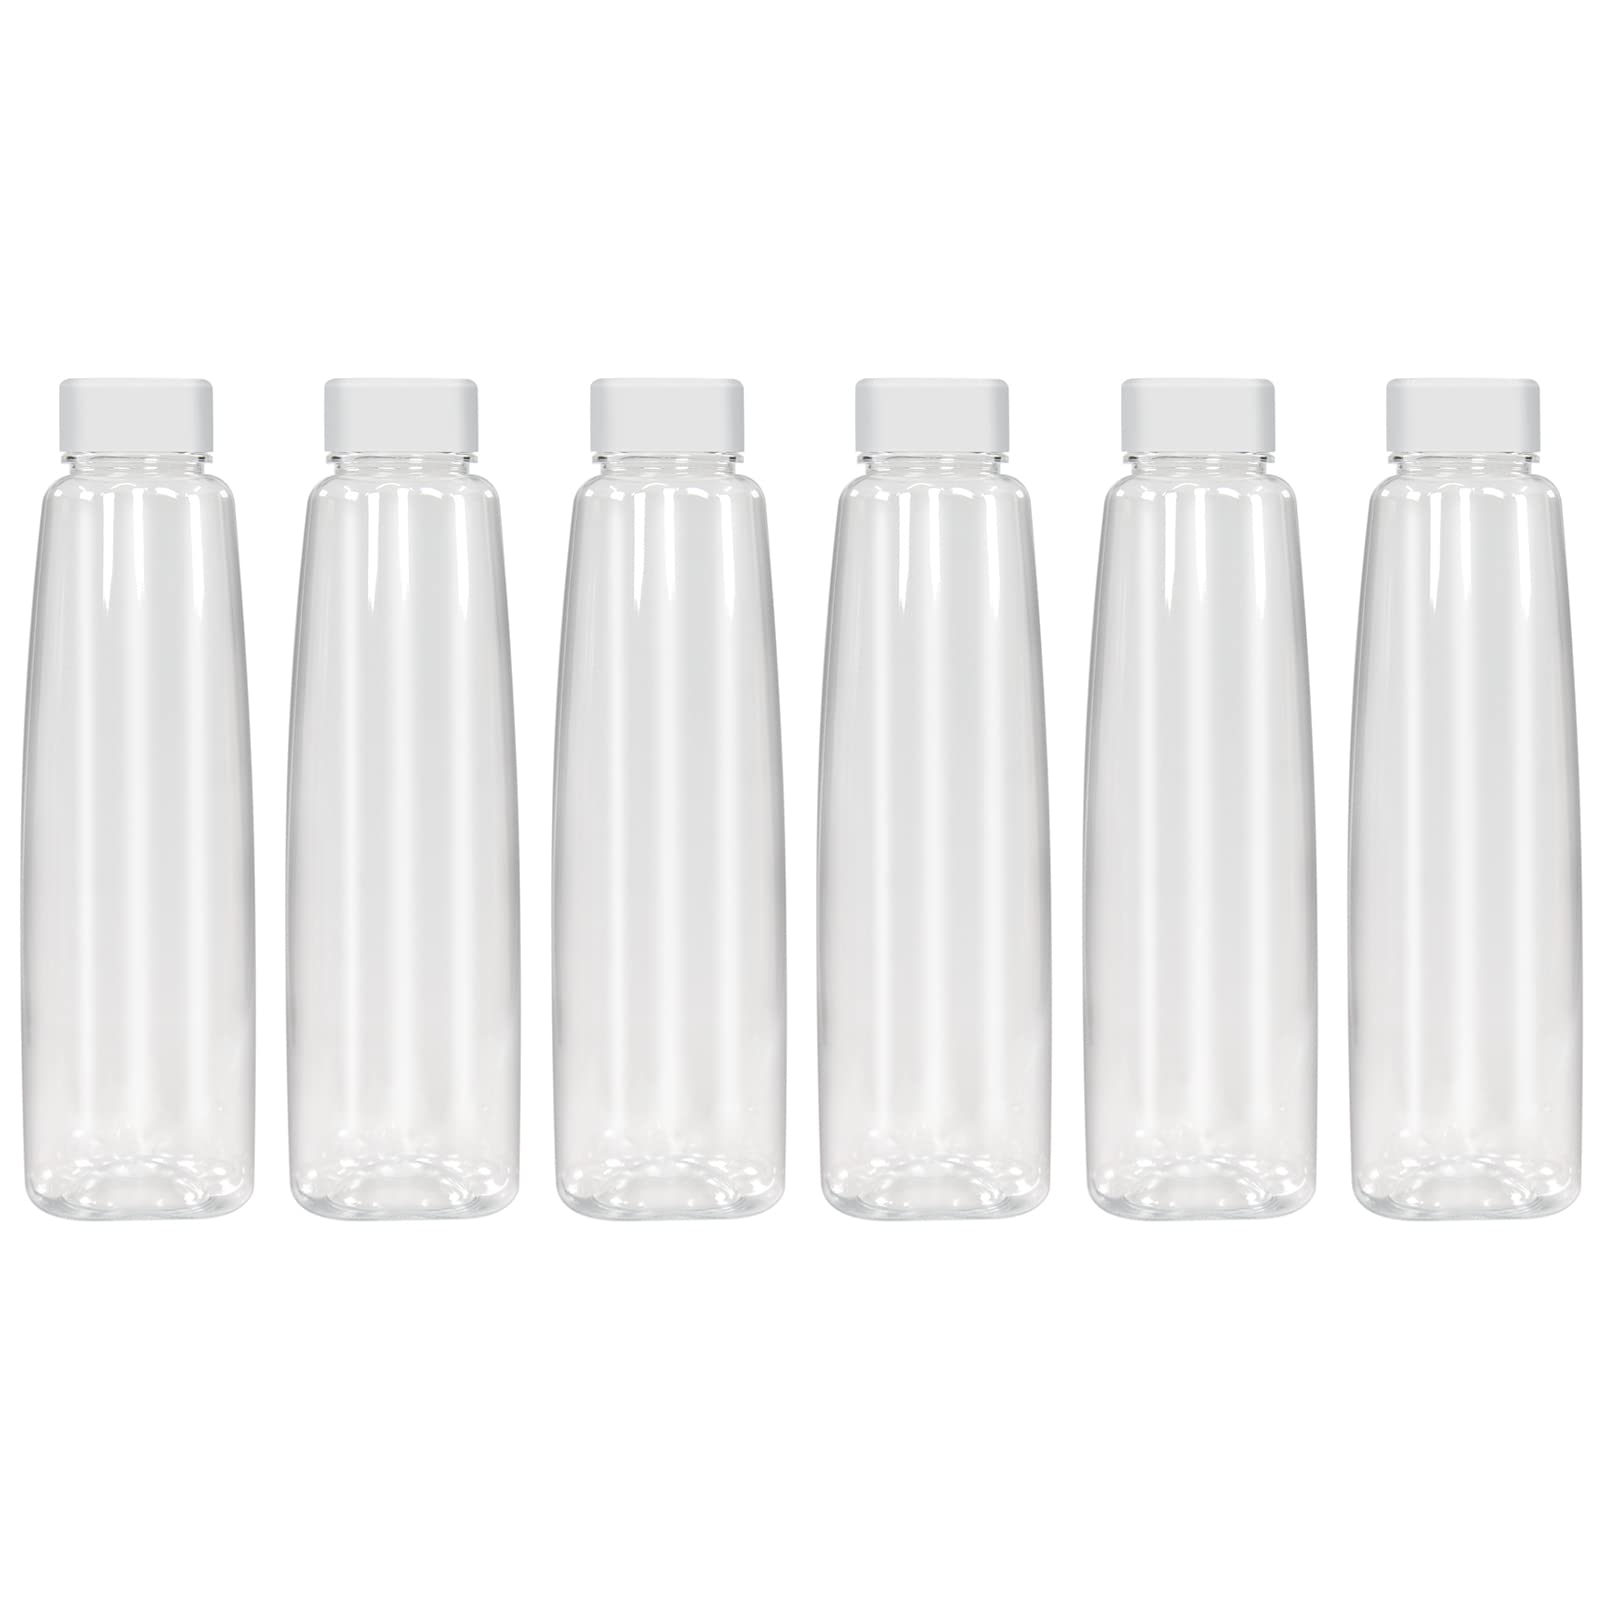 PEARLPET Kohinoor BPA-free Plastic Water Bottle Set of 6 Pcs, Each 1000ml, Transparent